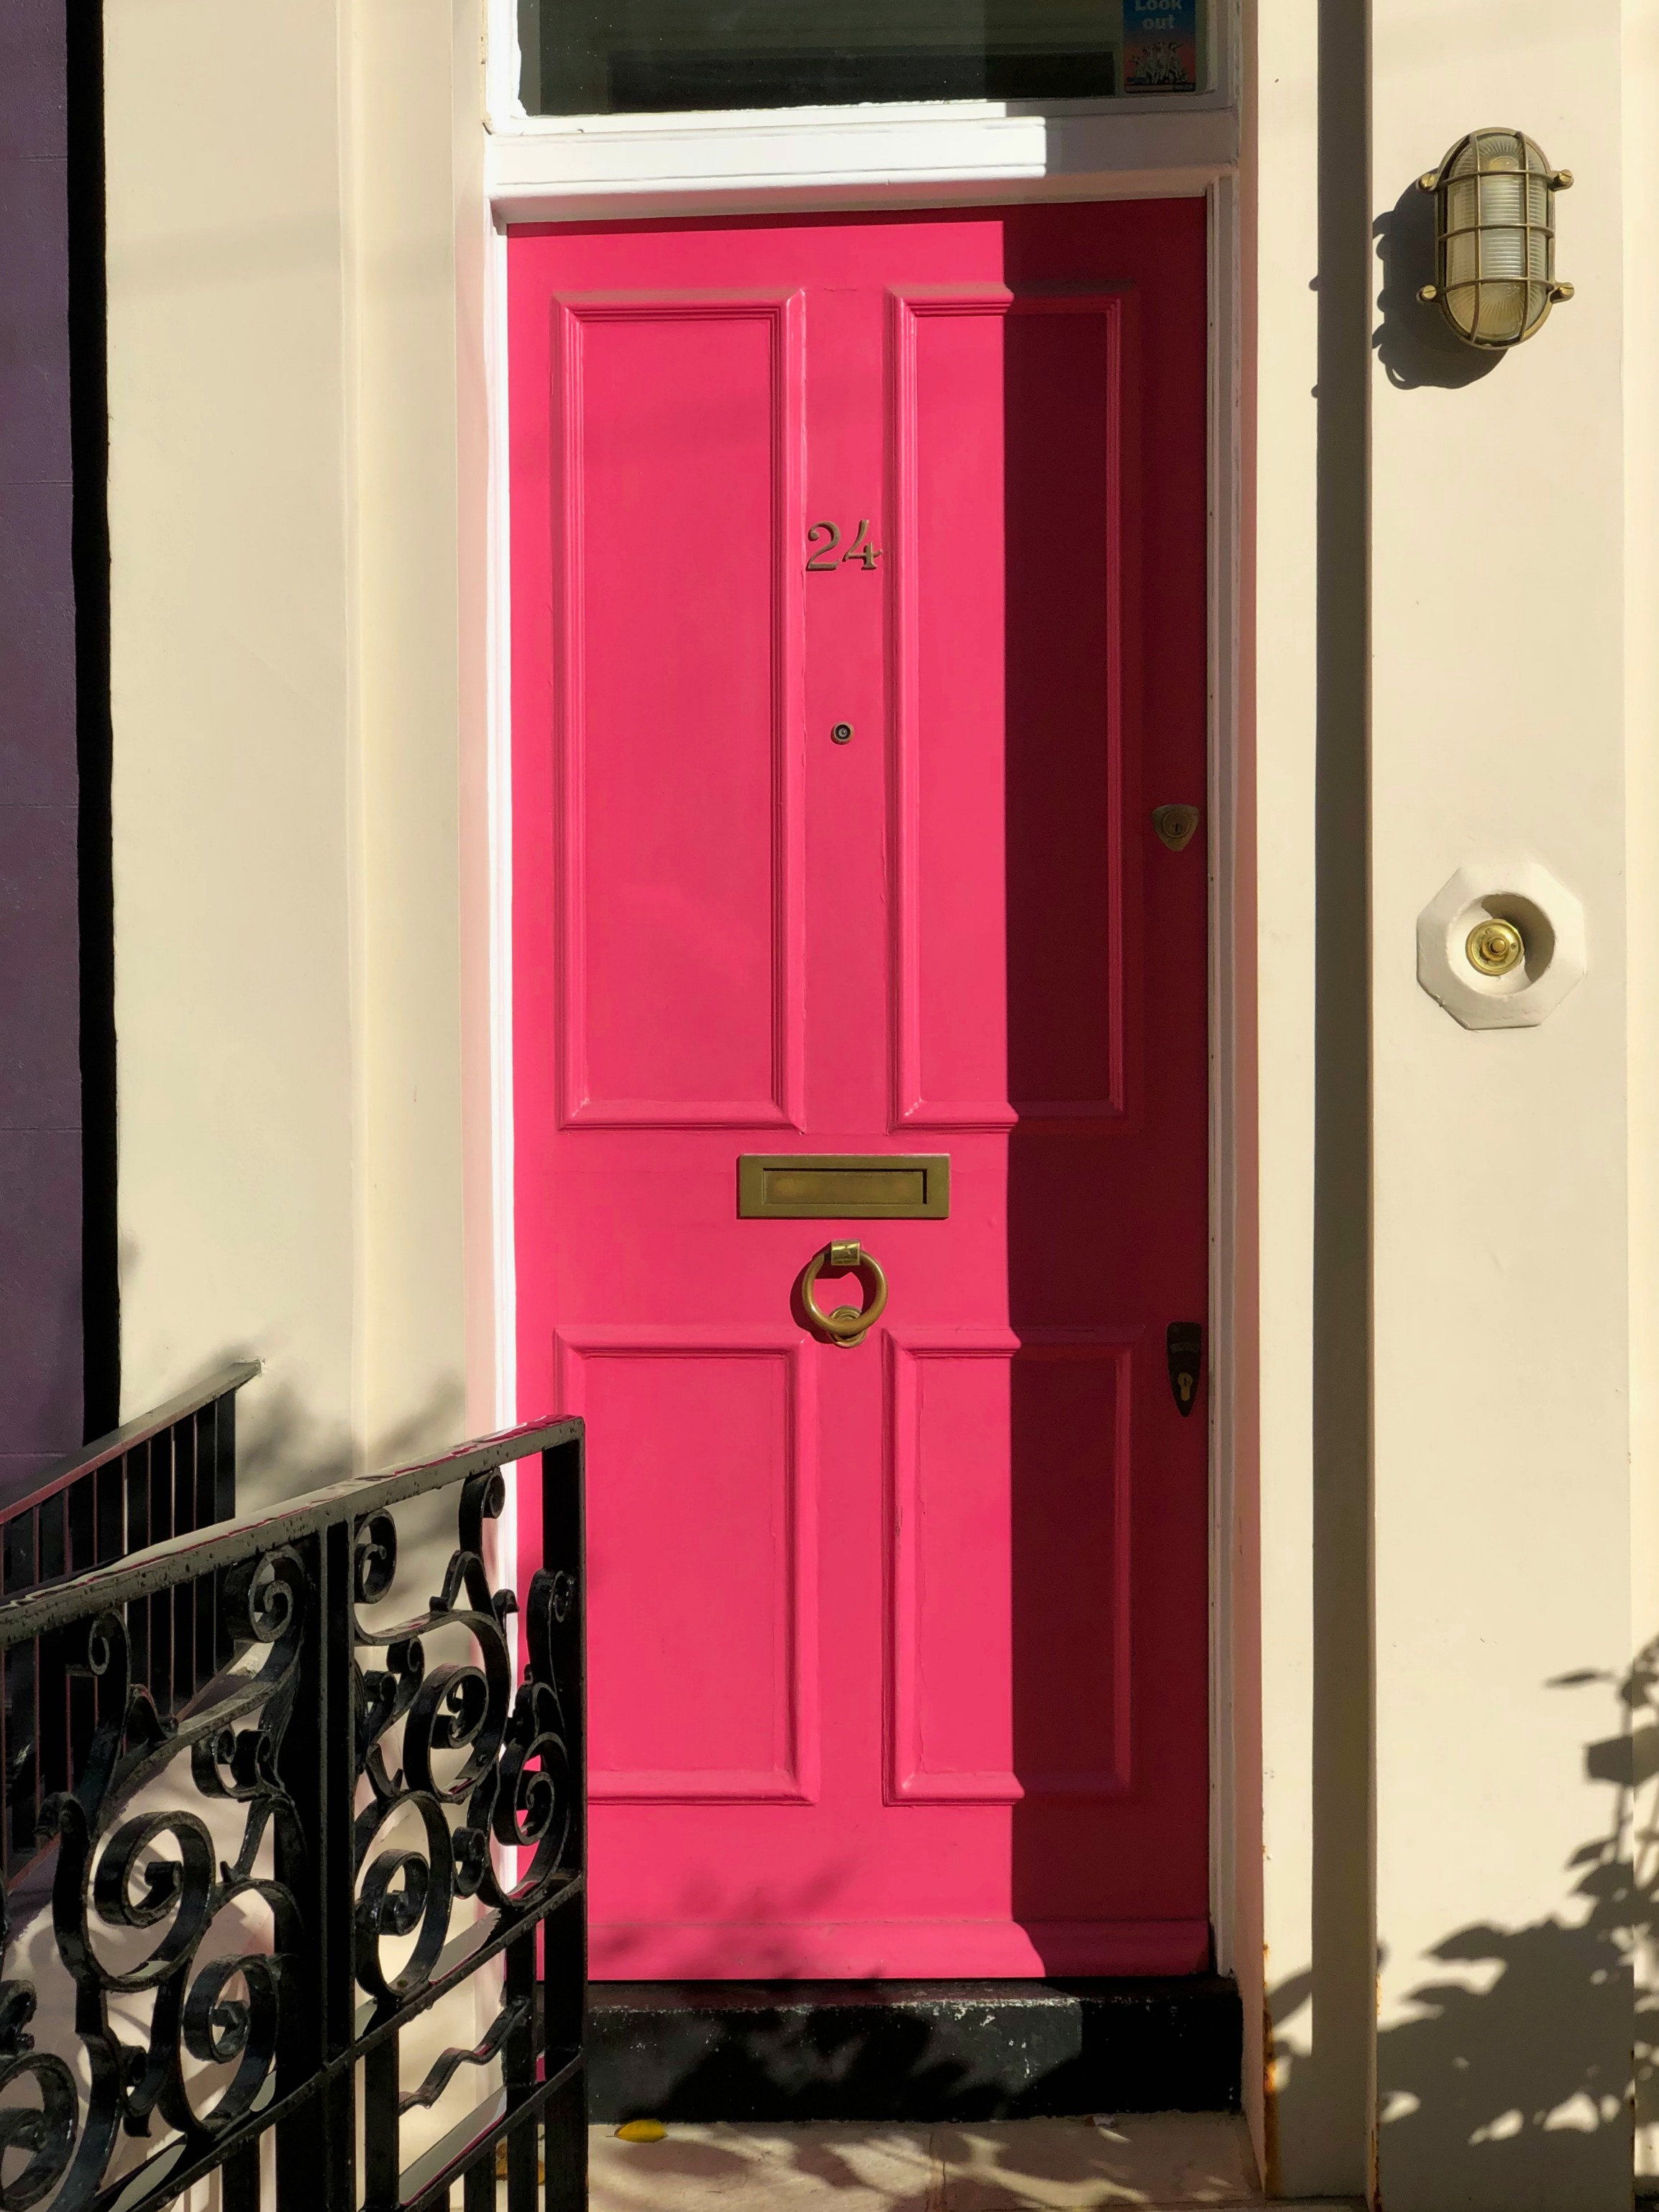 Blog - Notting Hill - Pink.jpg